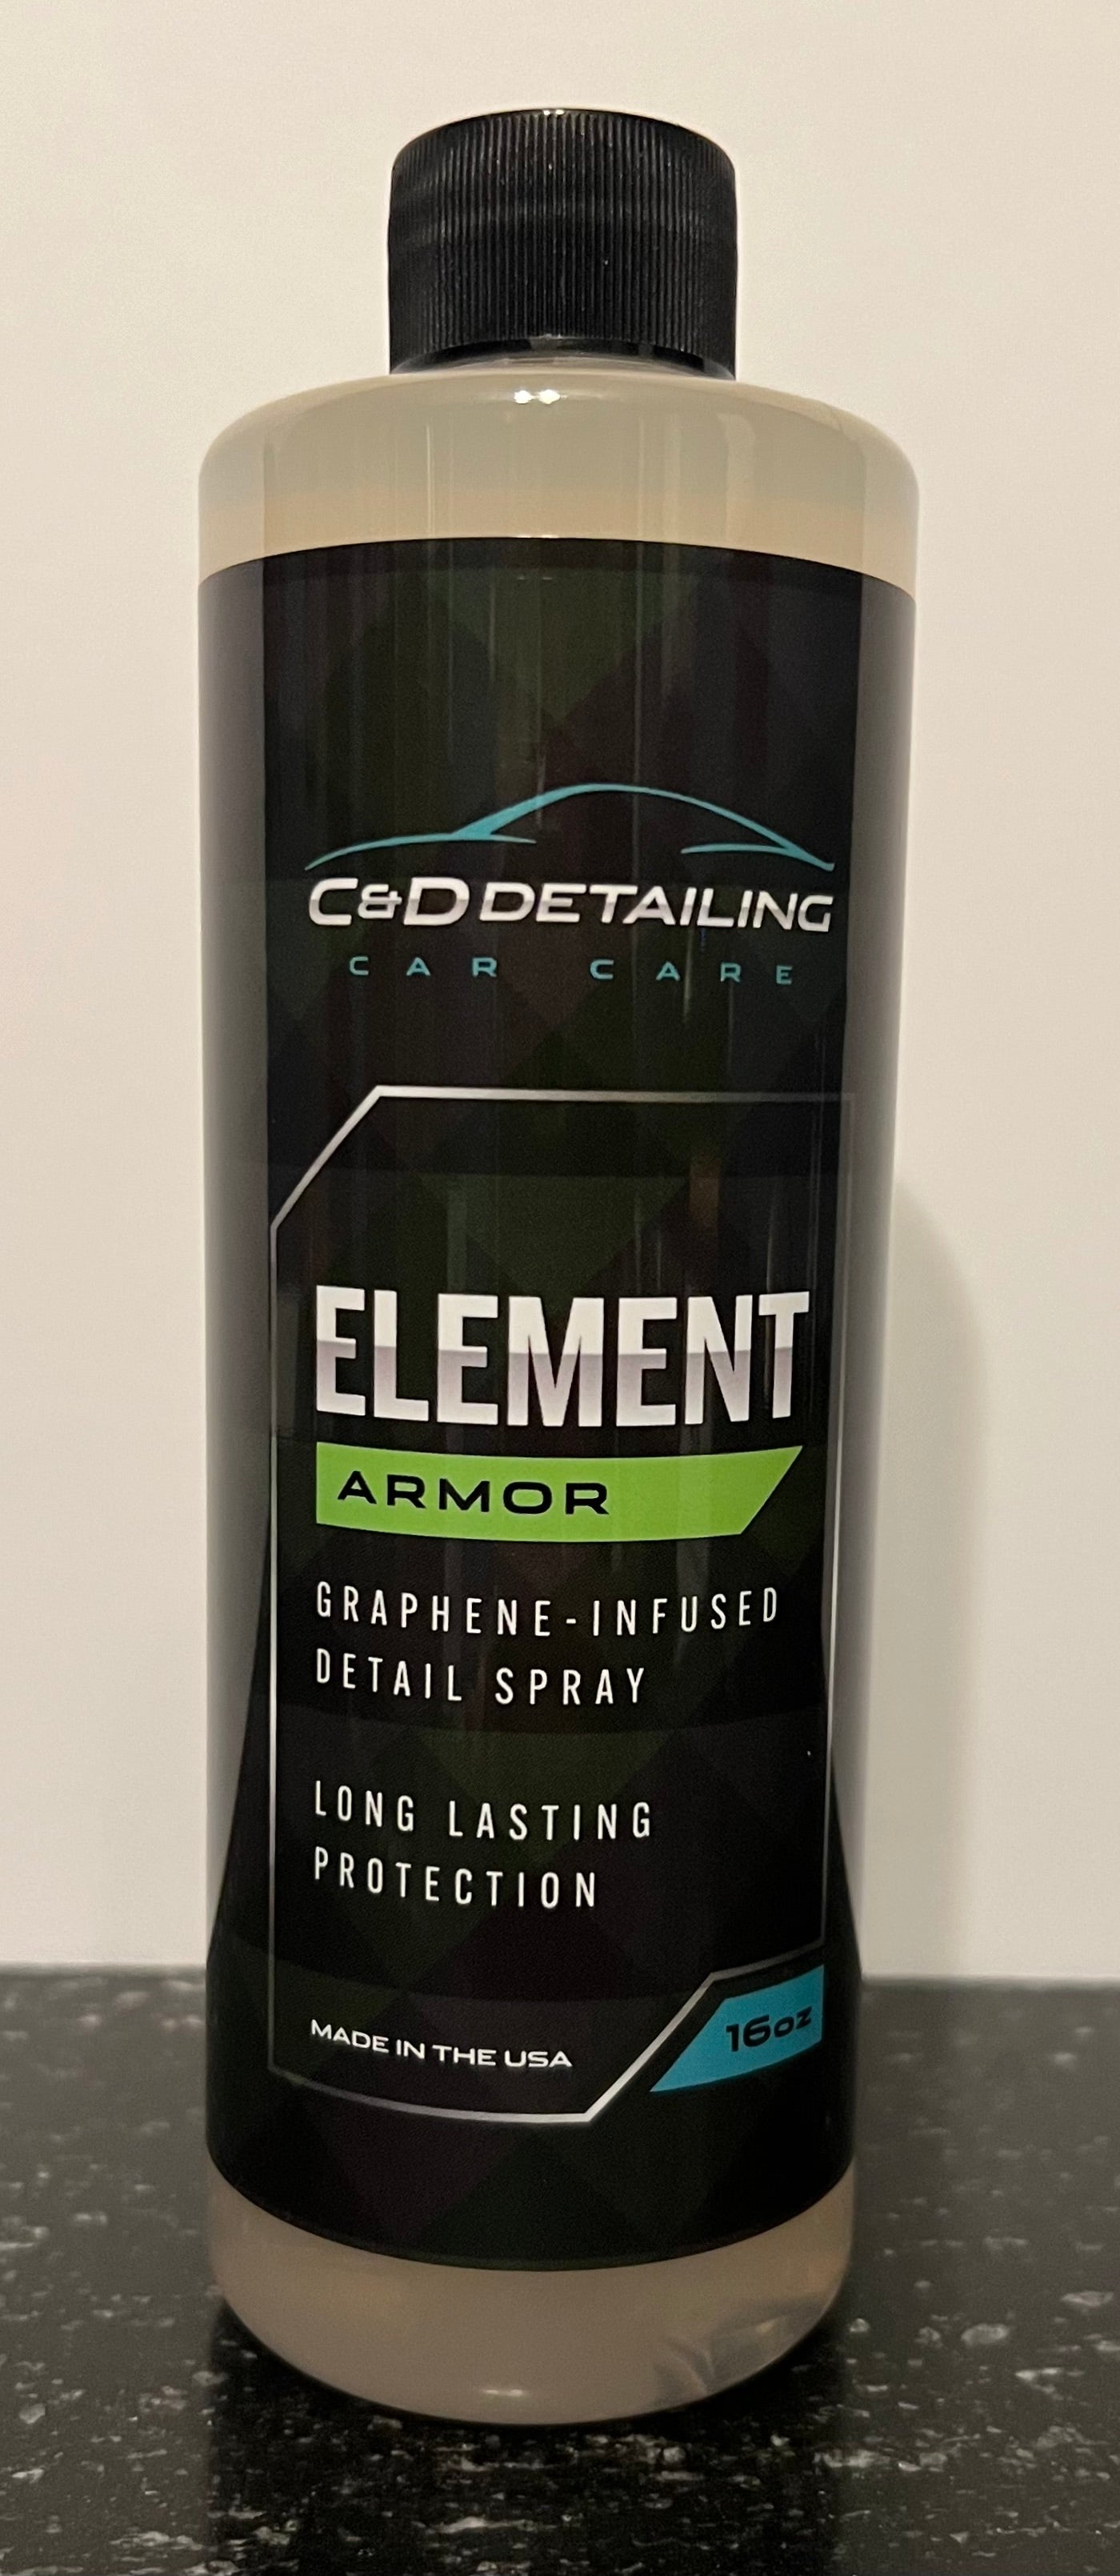 Element Armor Graphene-Infused Detail Spray – C&D Detailing Car Care